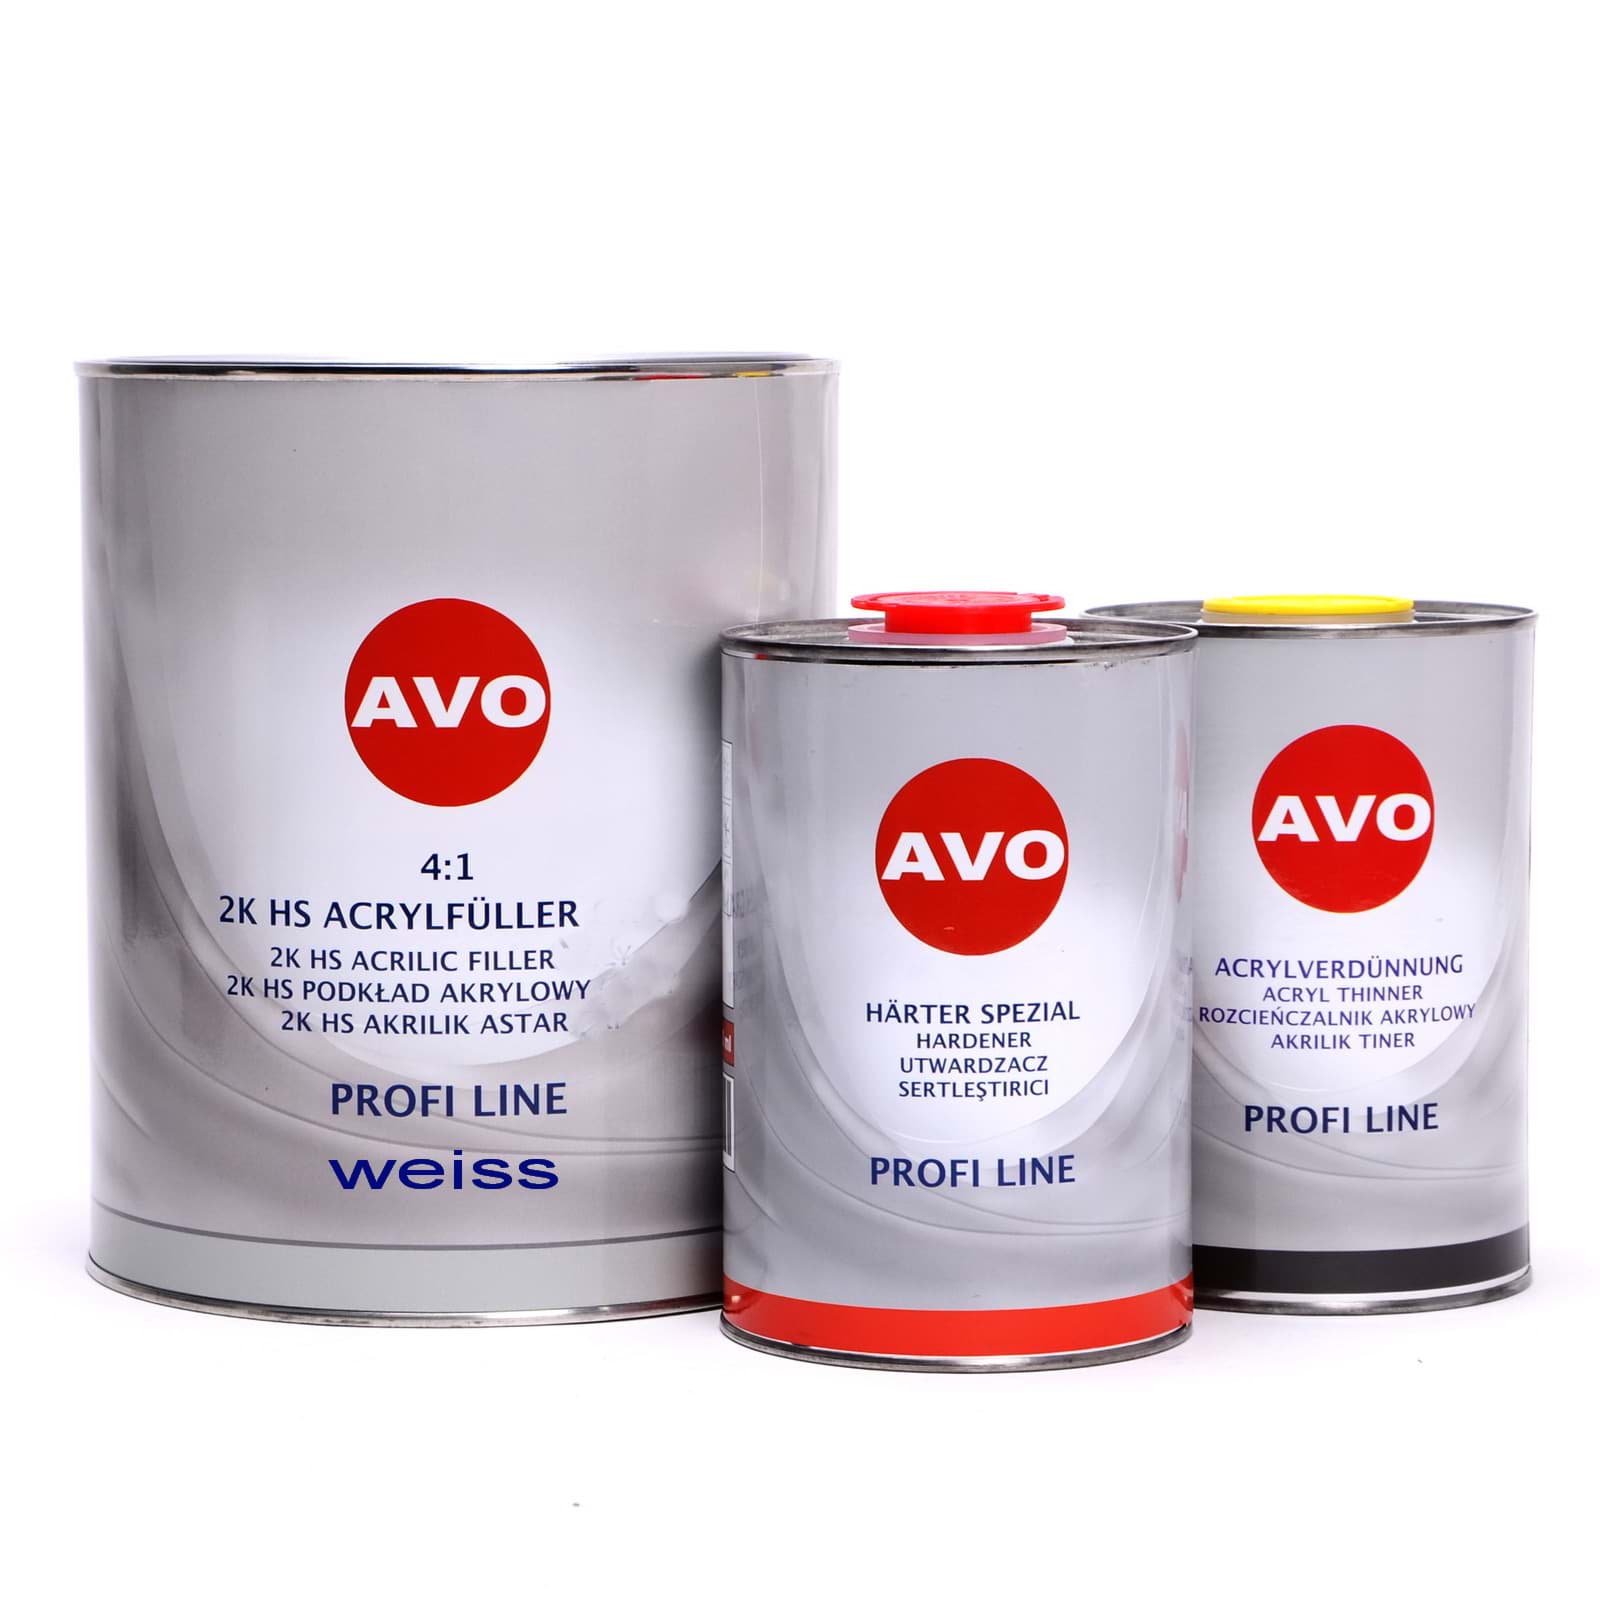 AVO 2K HS 4:1 Grundier Füller  Acrylfiller weiss 6 Liter Set (4Liter Füller + 1 Liter Härter + 1 Liter 2K Acrylverdünnung) resmi